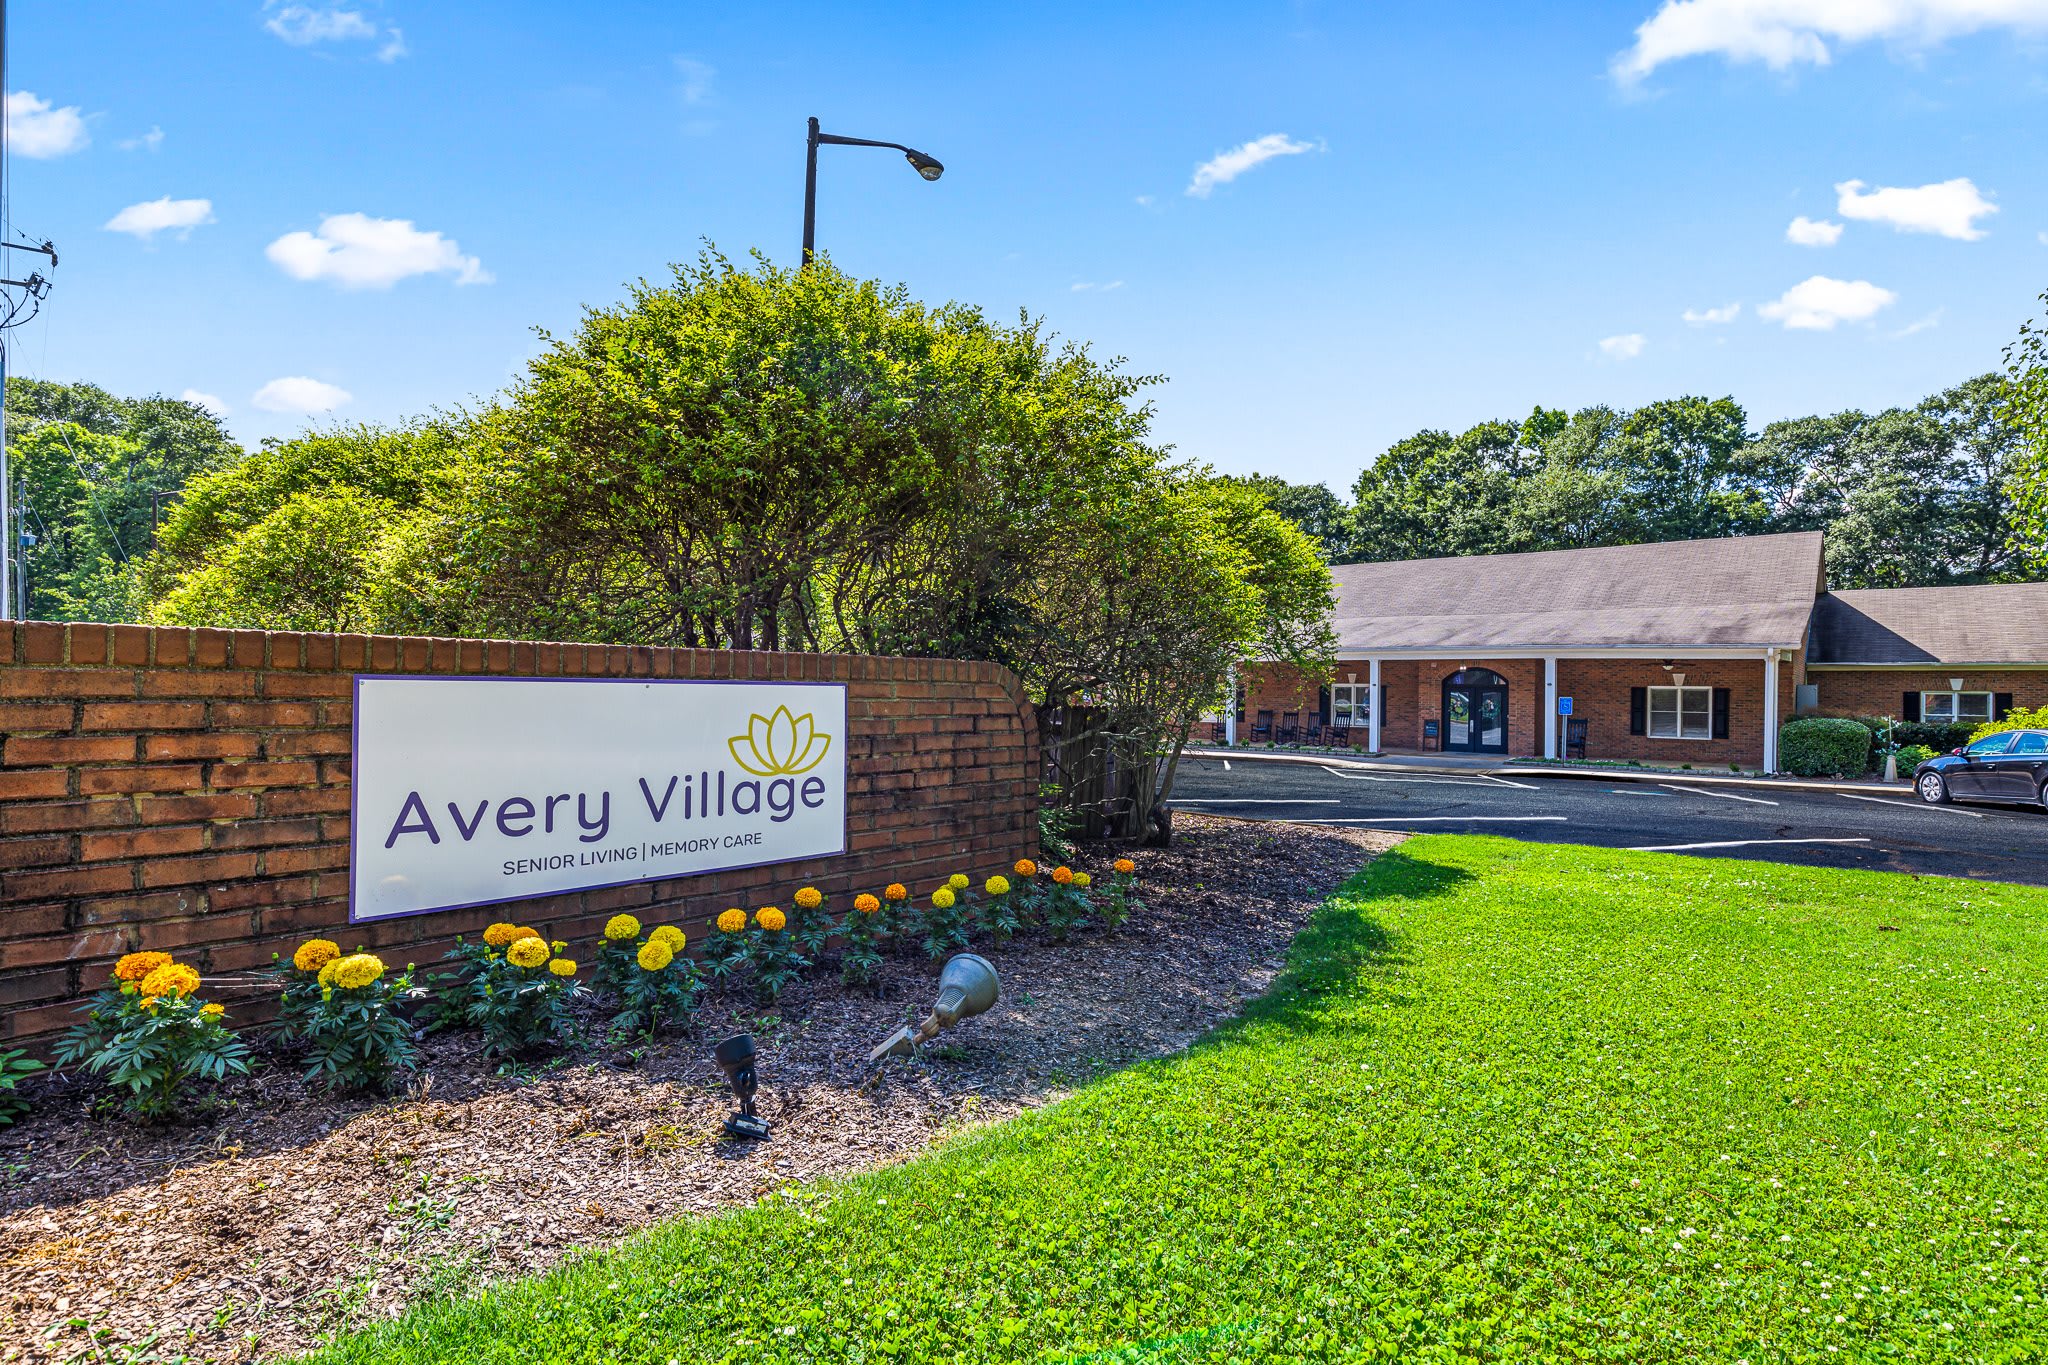 Avery Village